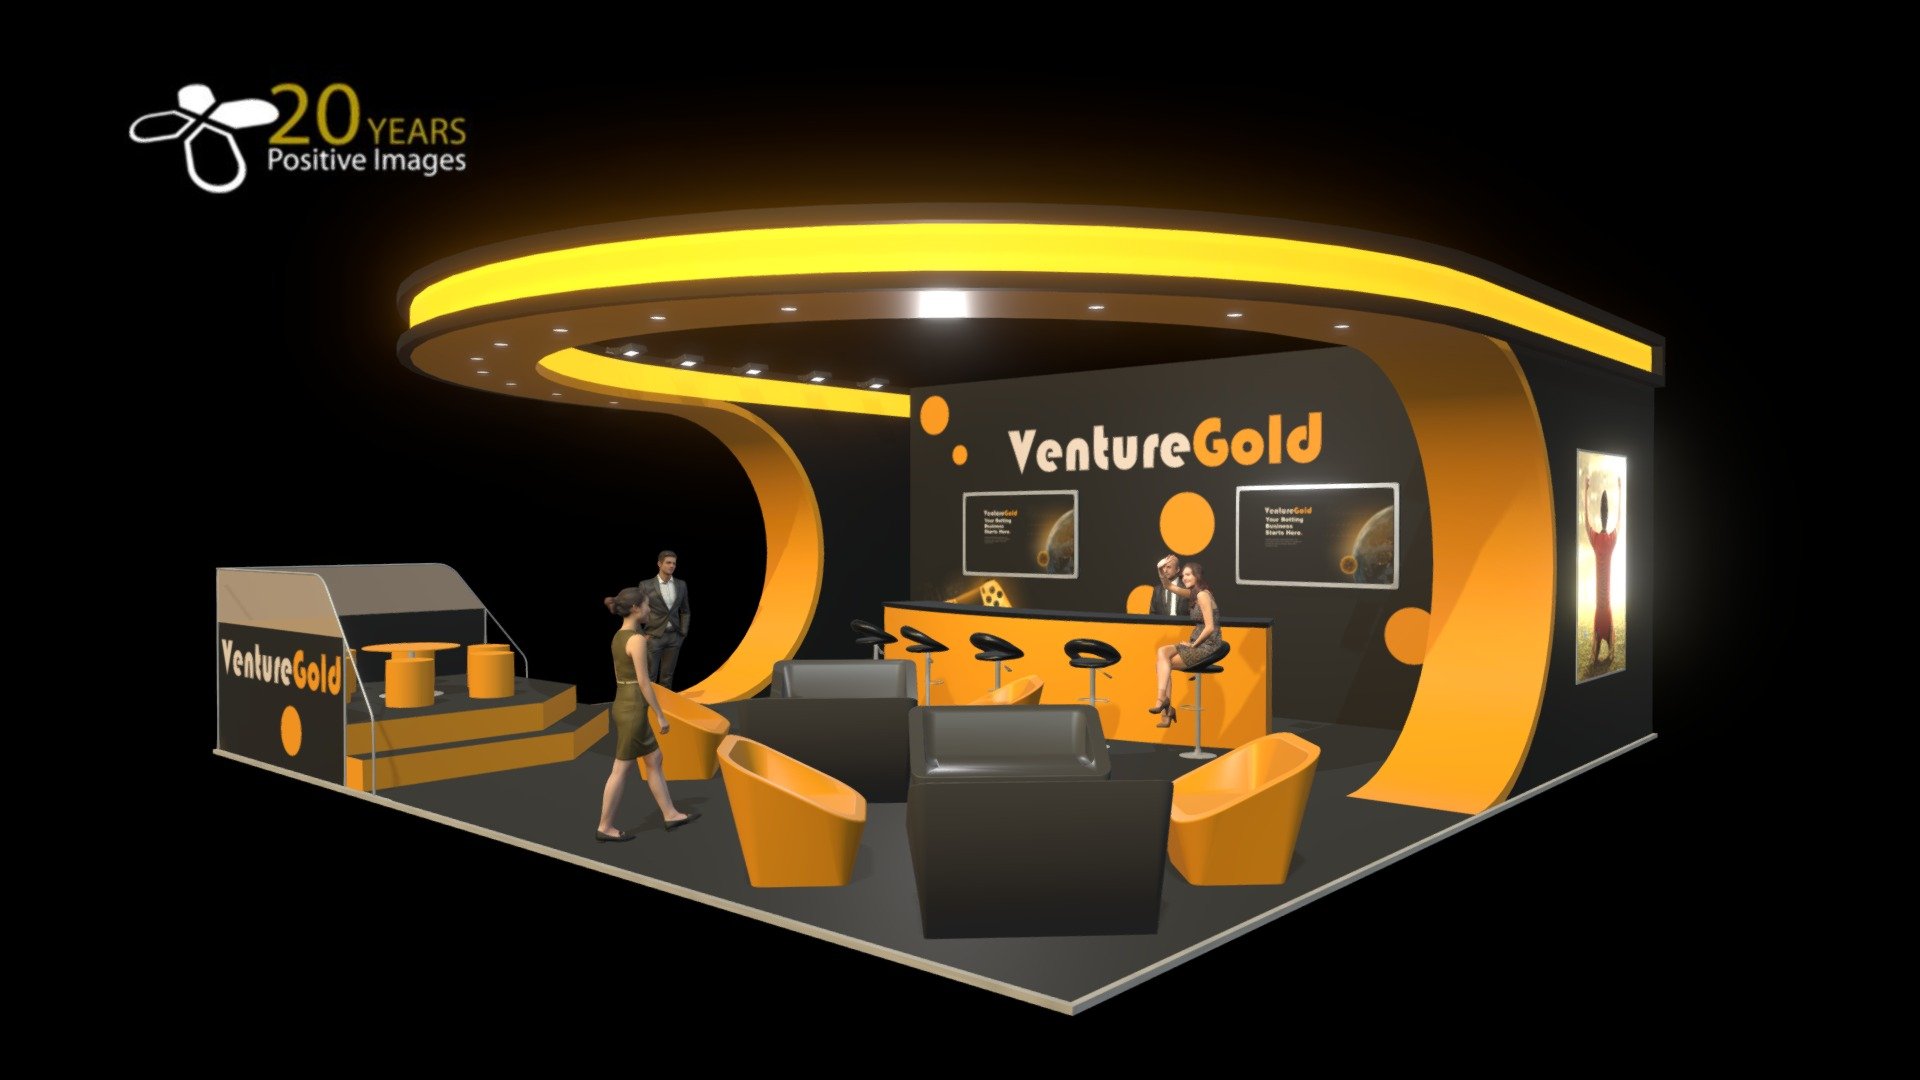 Venture Gold custom exhibition stand - 3D model by Positive Images (@PositiveImages) 3d model